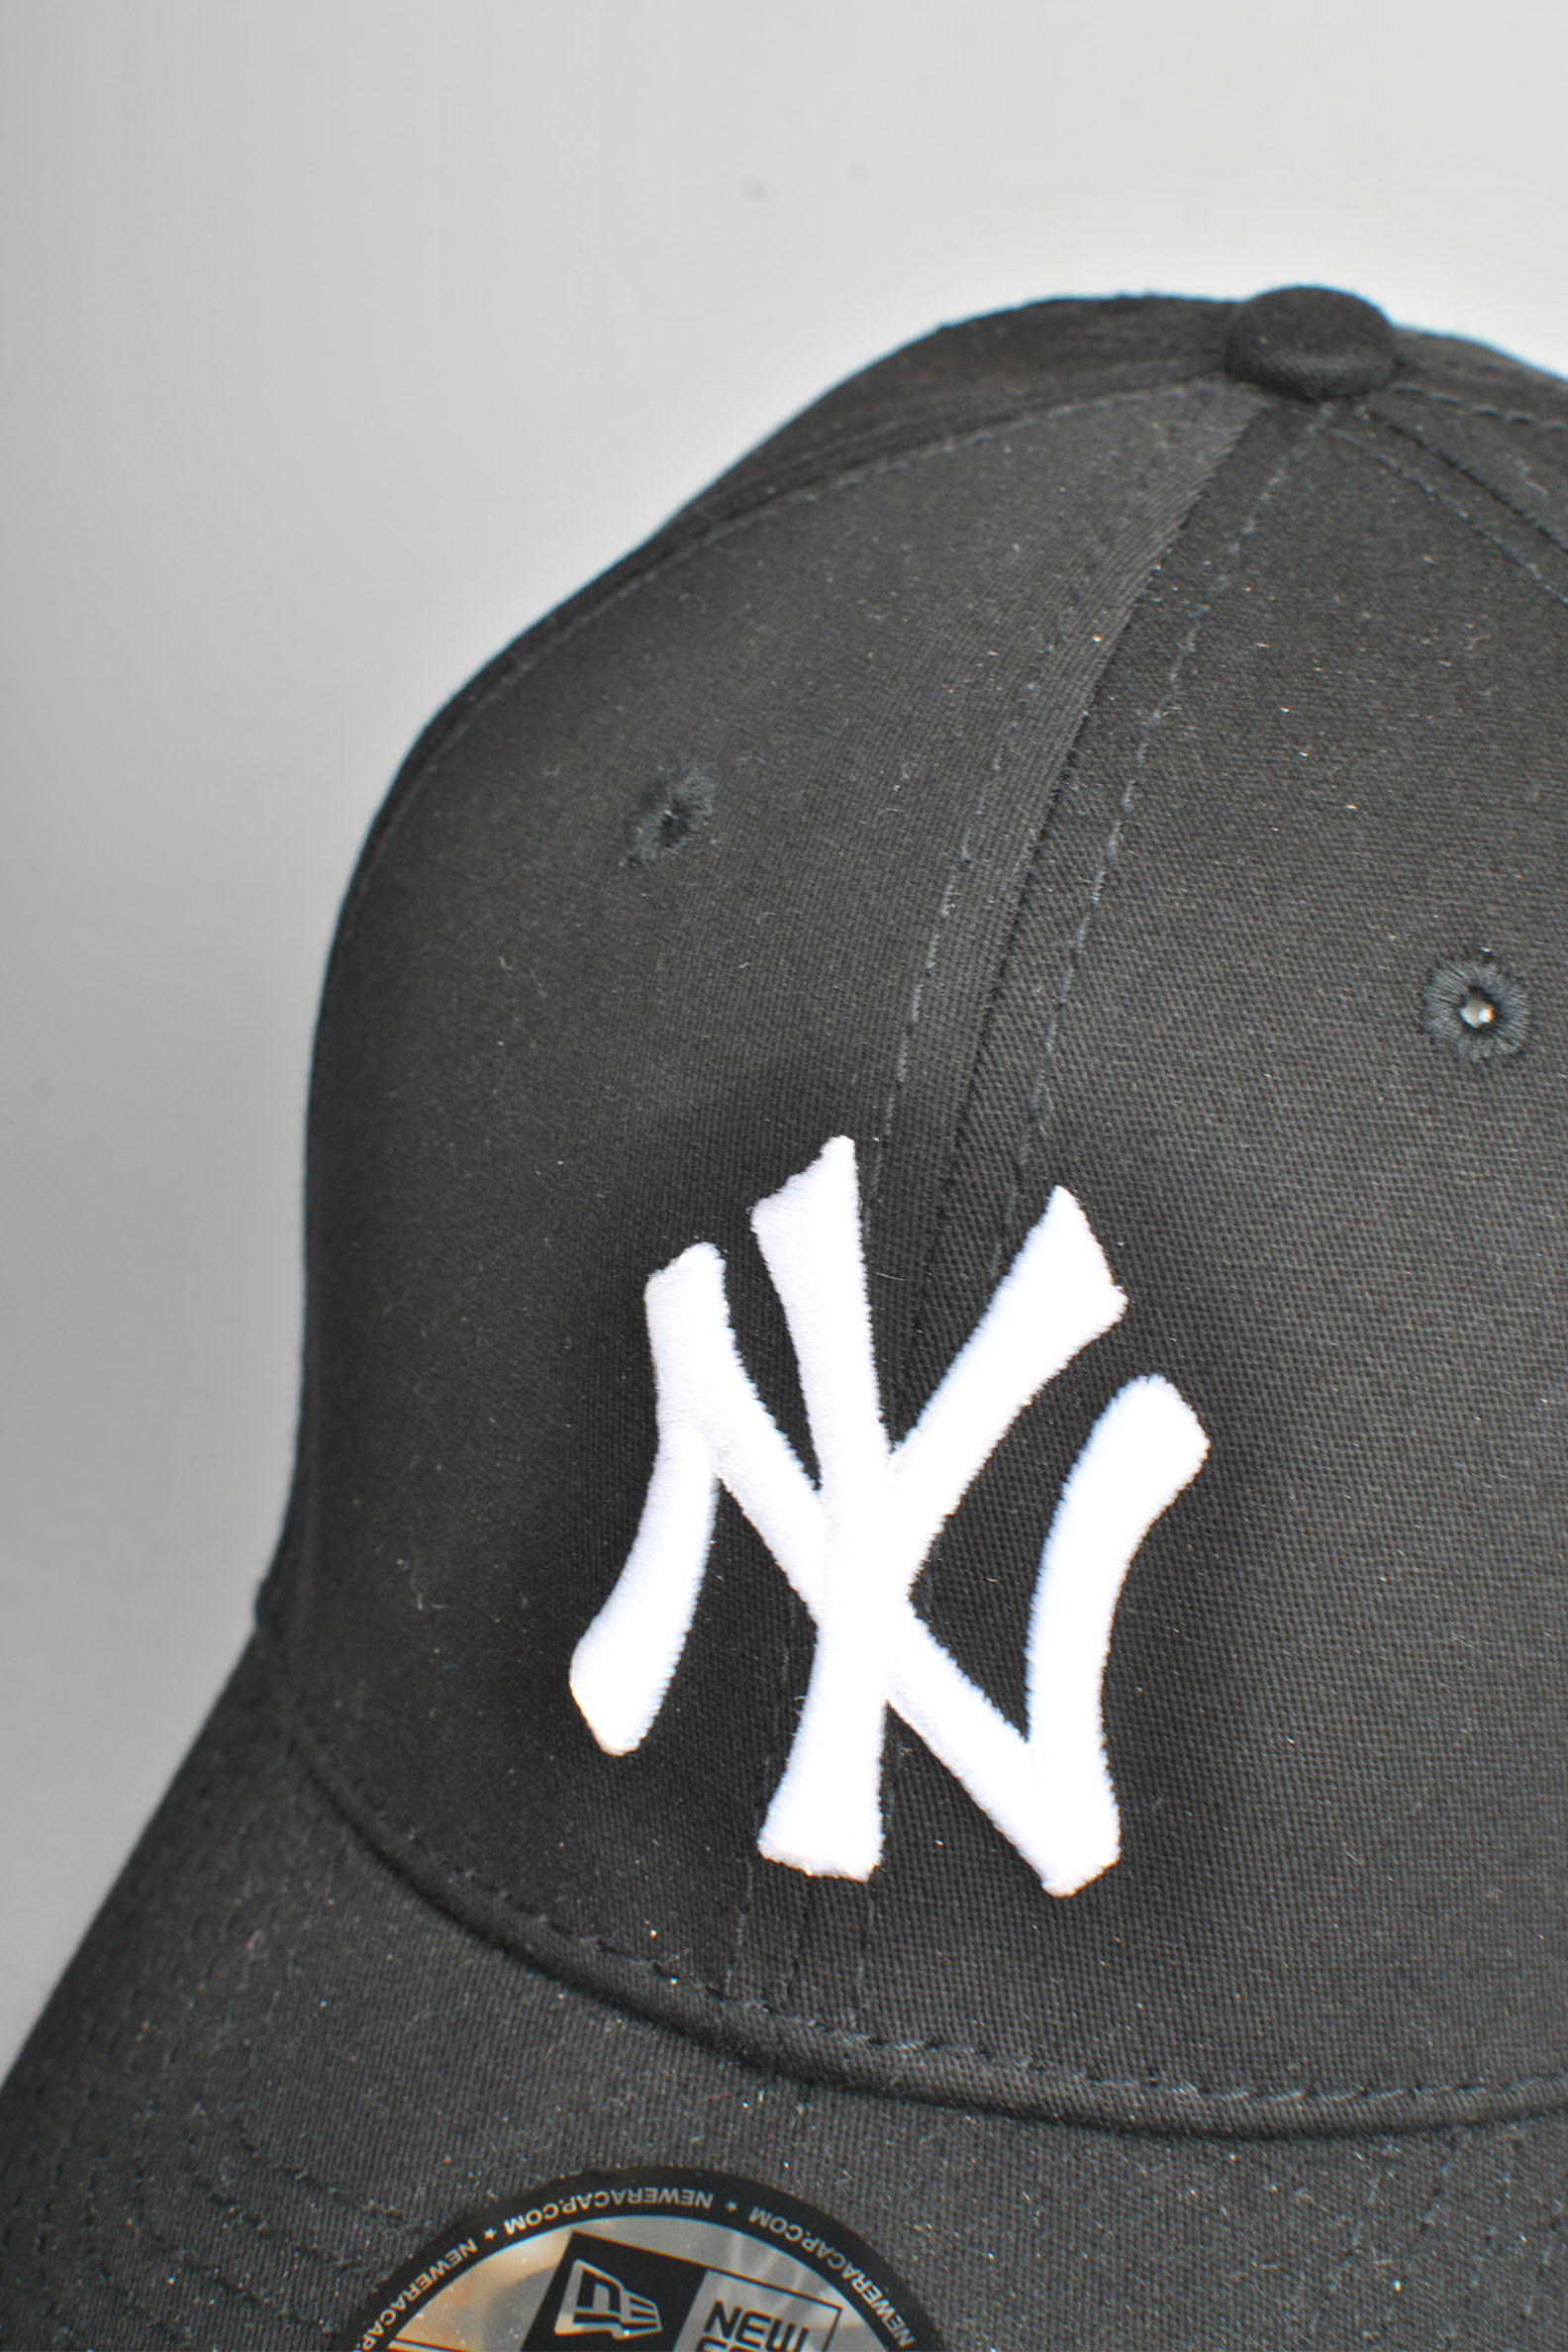 NY Yankees 39Thirty Cap, Black/White